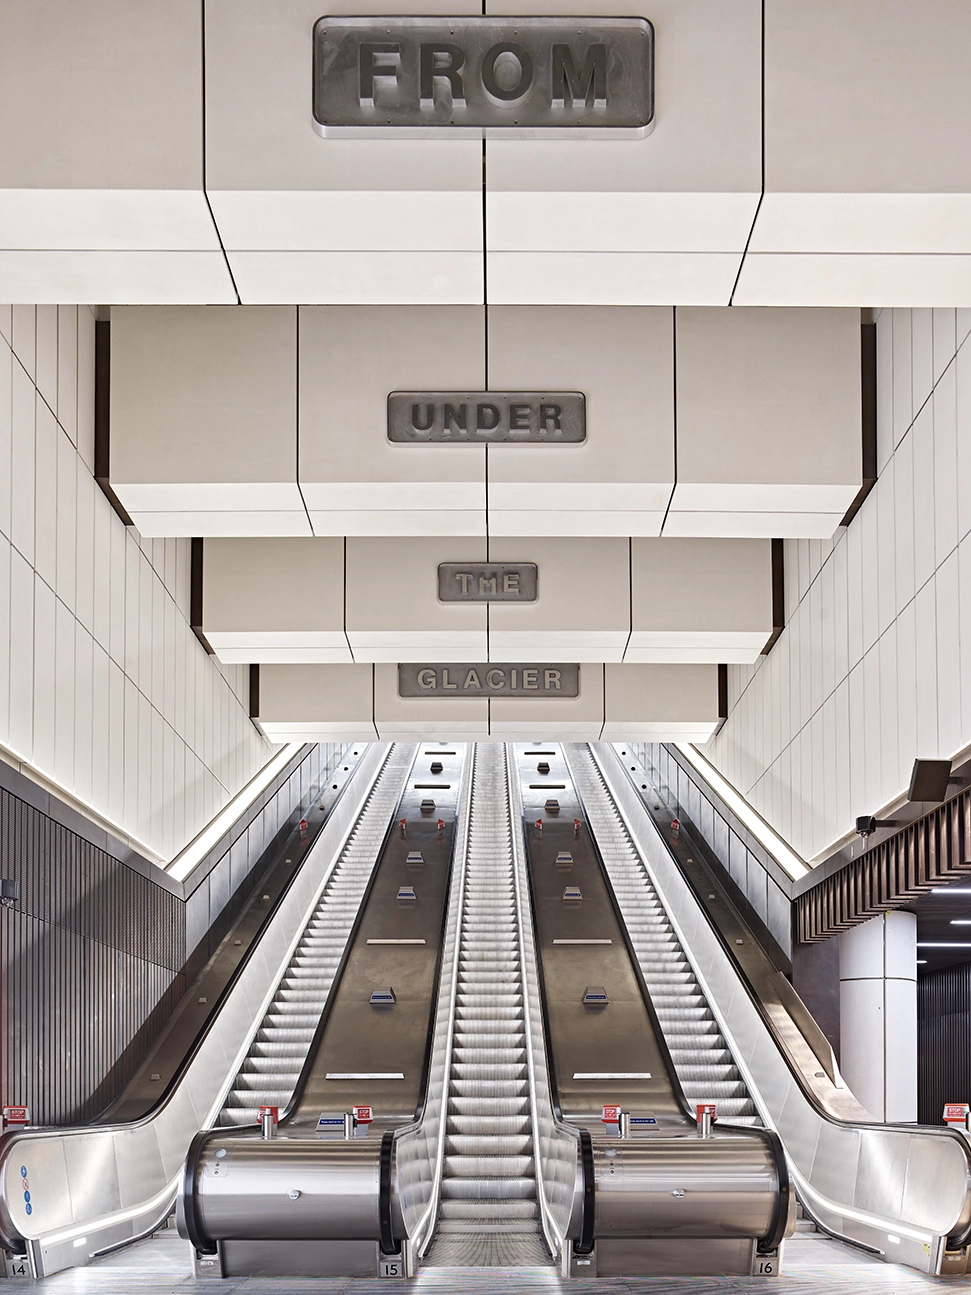 Elizabeth line: The new Bond Street station finally opens